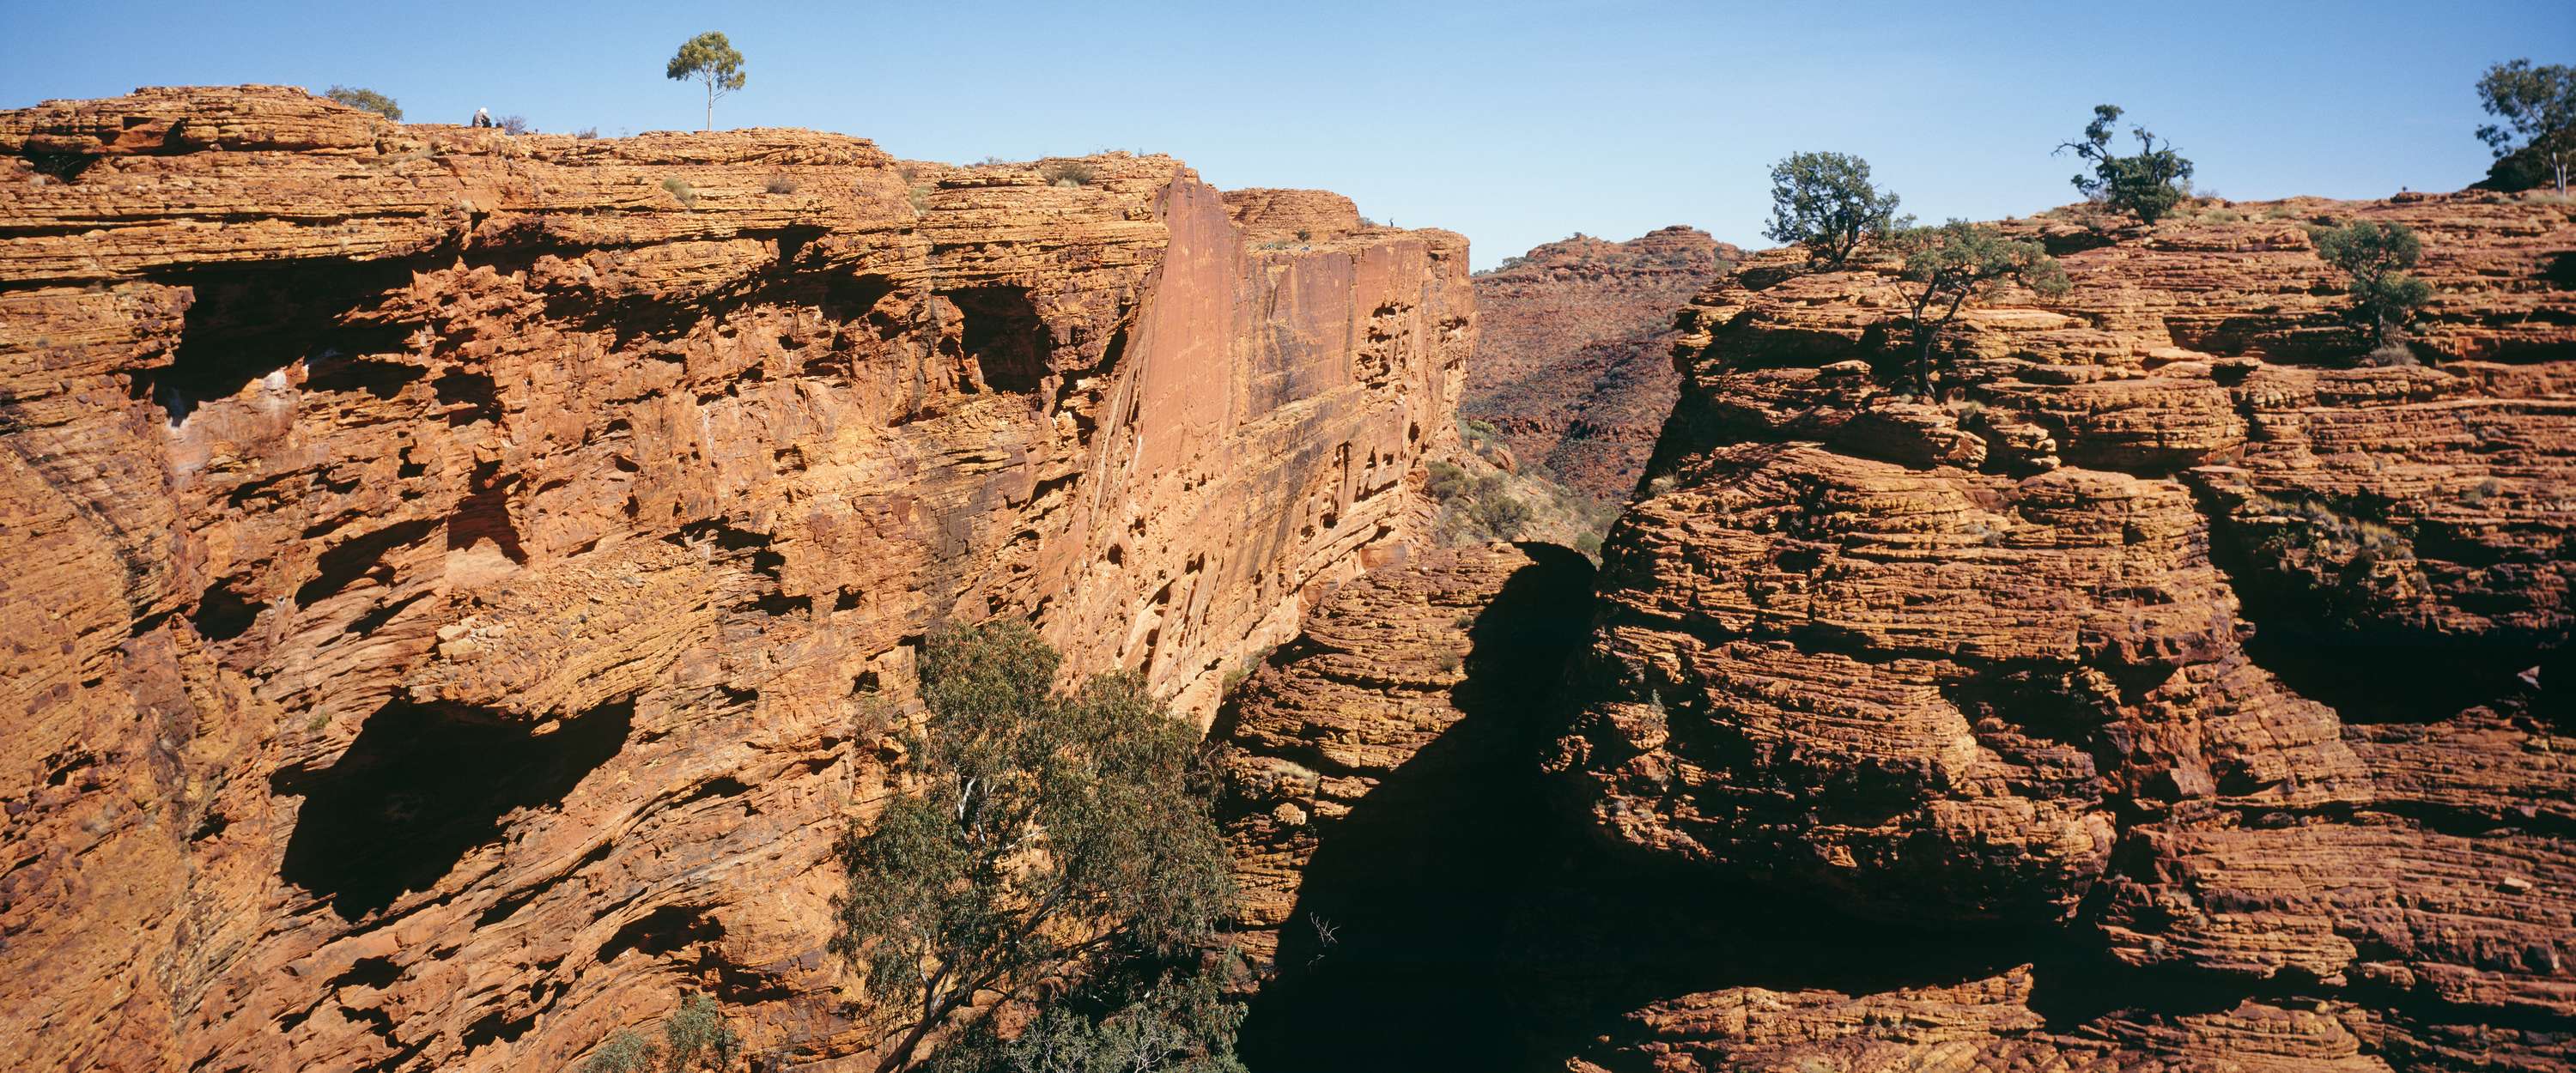             Kings Canyon – Fototapete mit Felsenschlucht
        